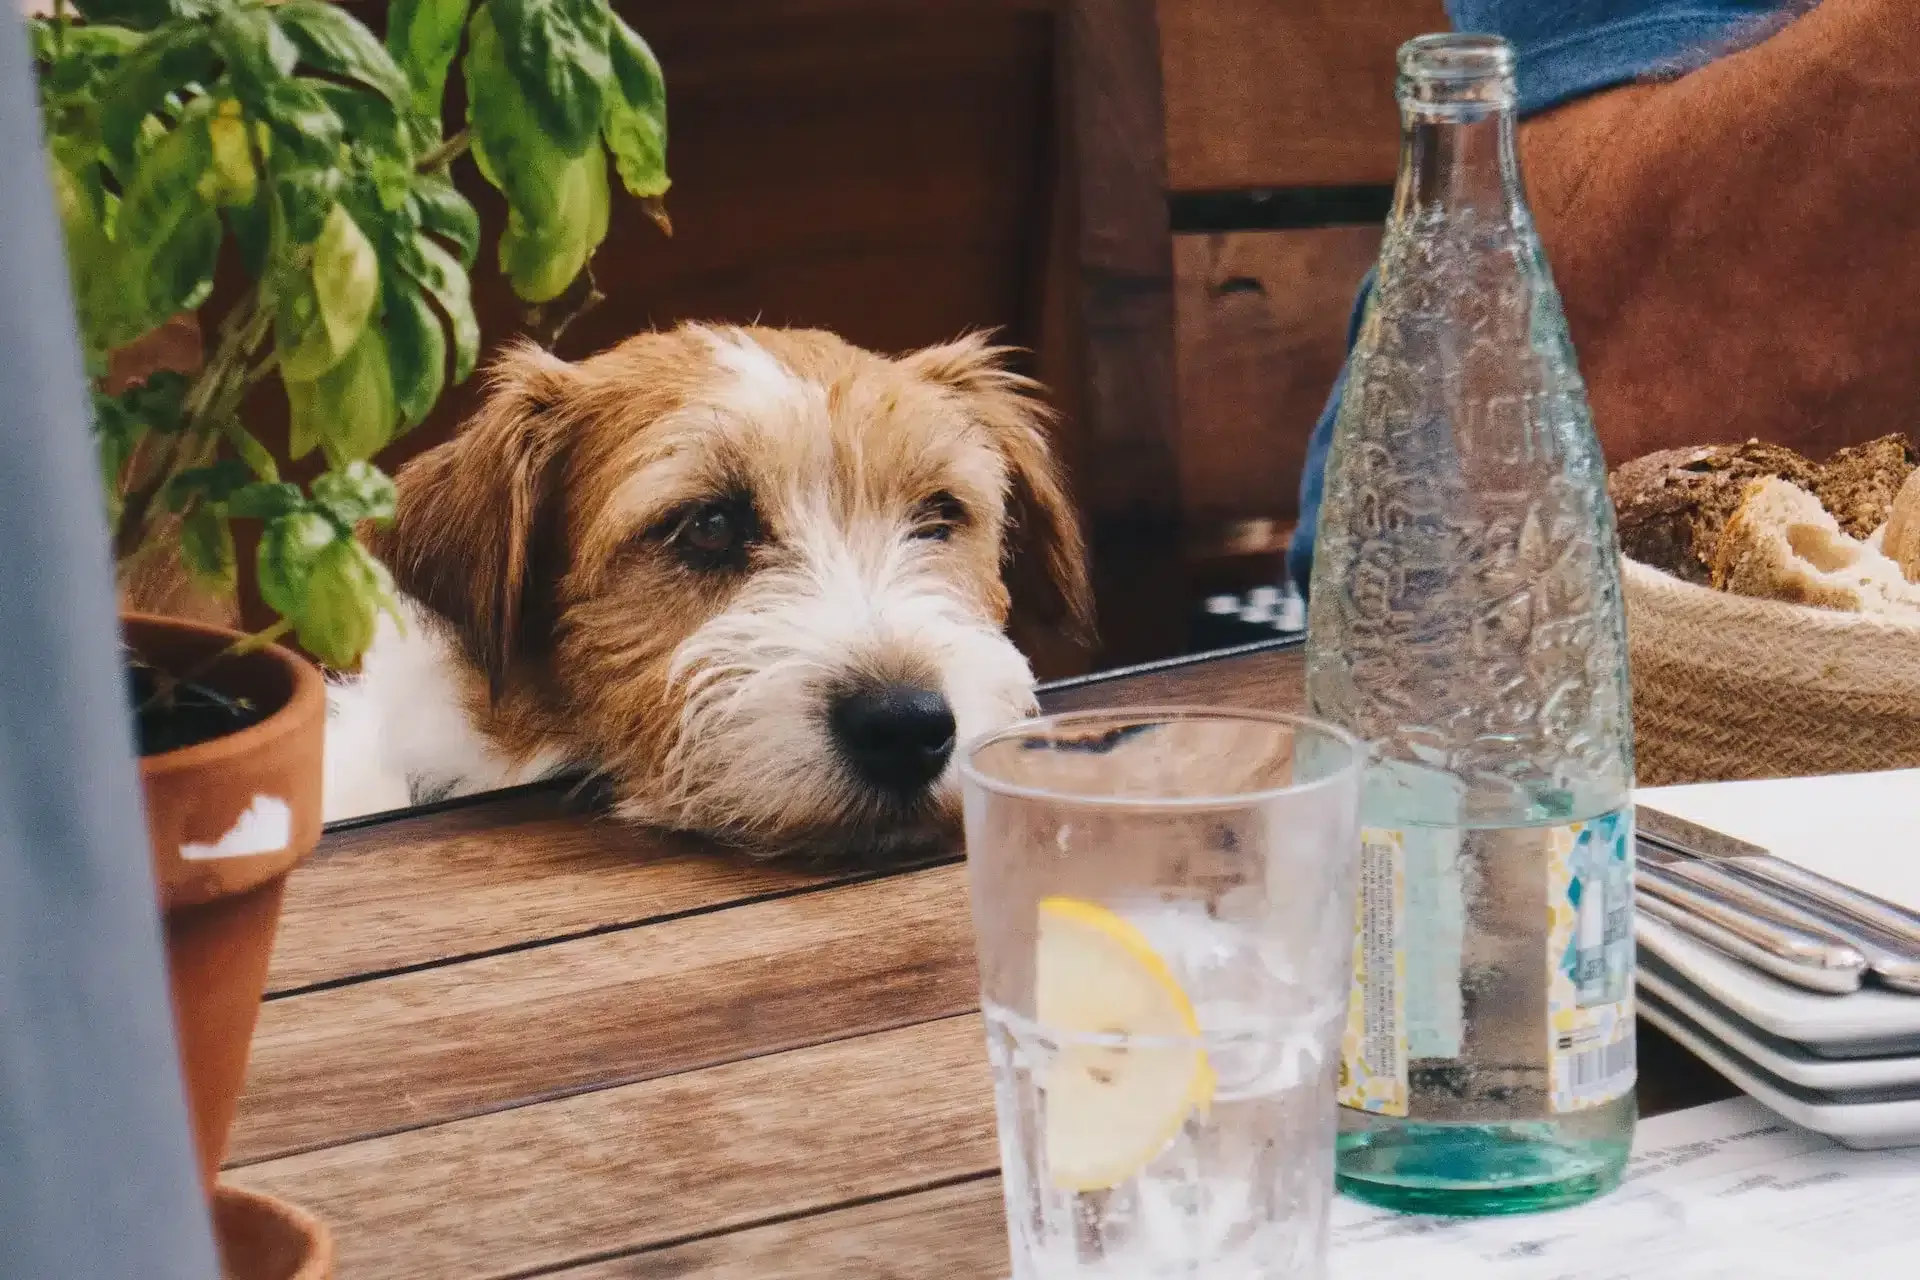 can dogs drink getorade